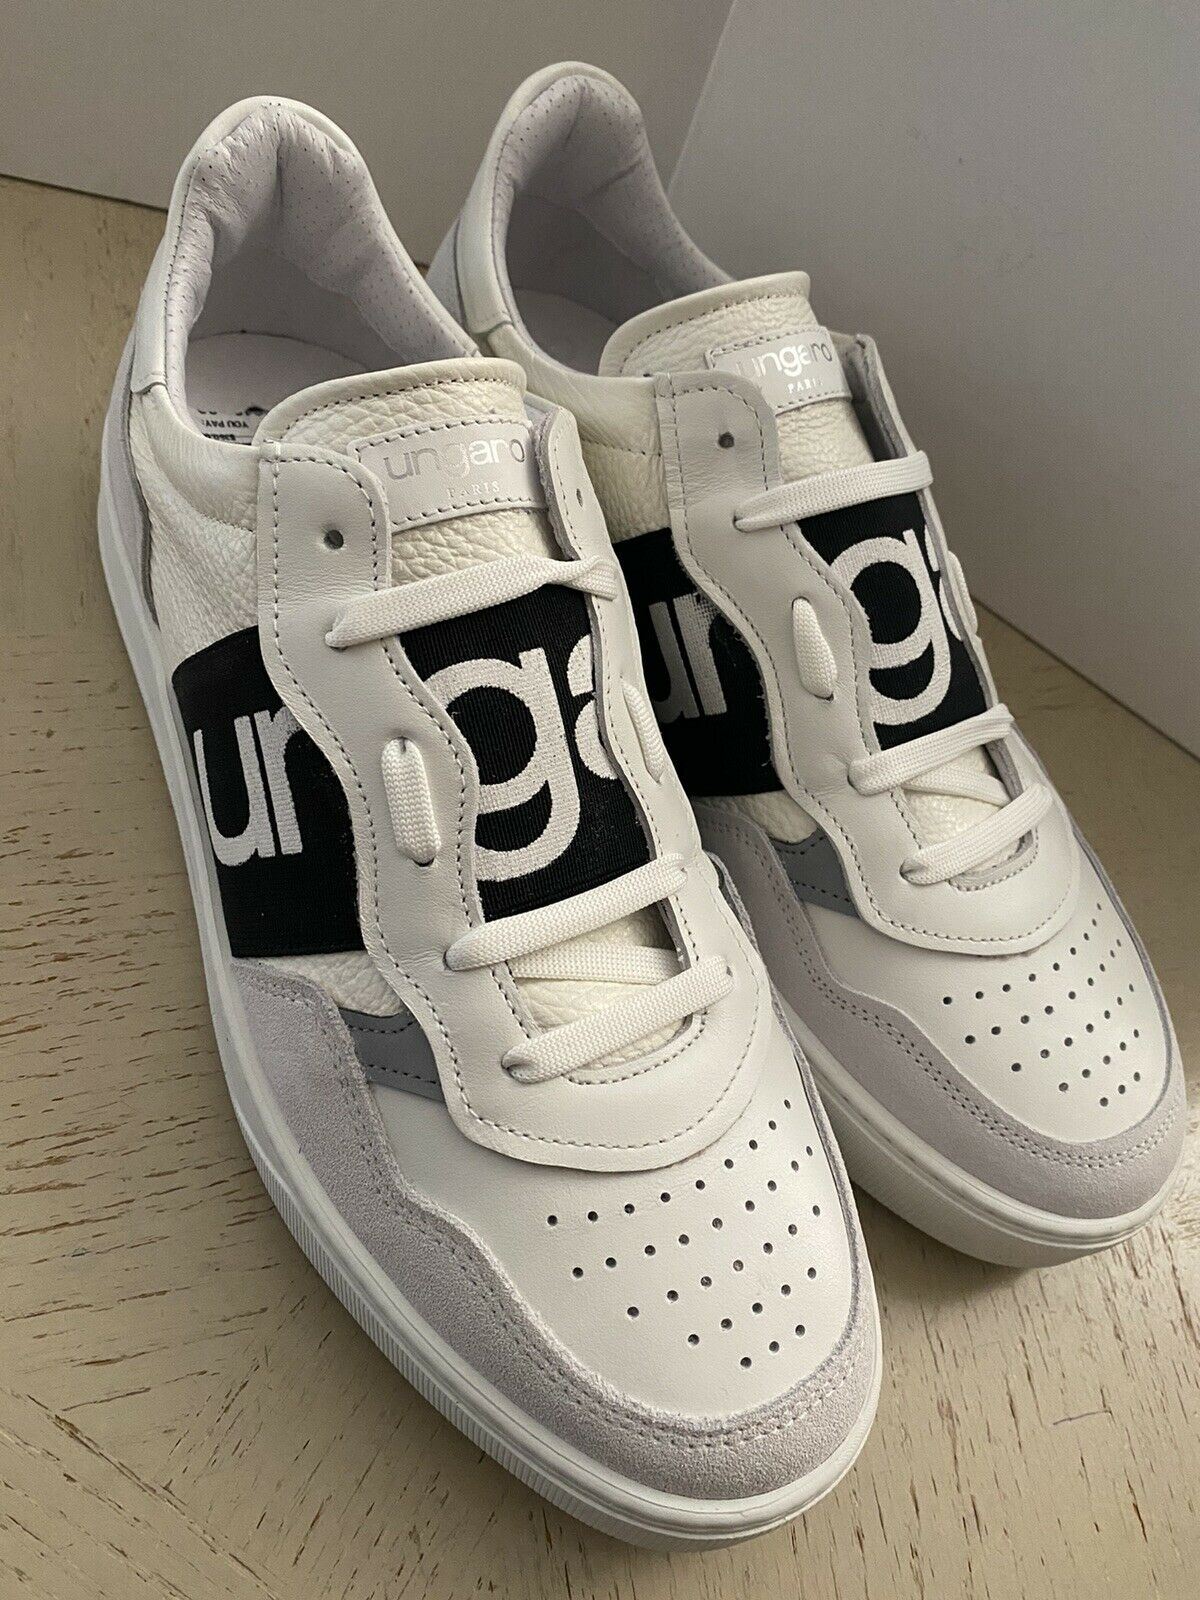 Neue Ungaro Herren Sneakers Schuhe Weiß 10 US (43 Eu) Italien